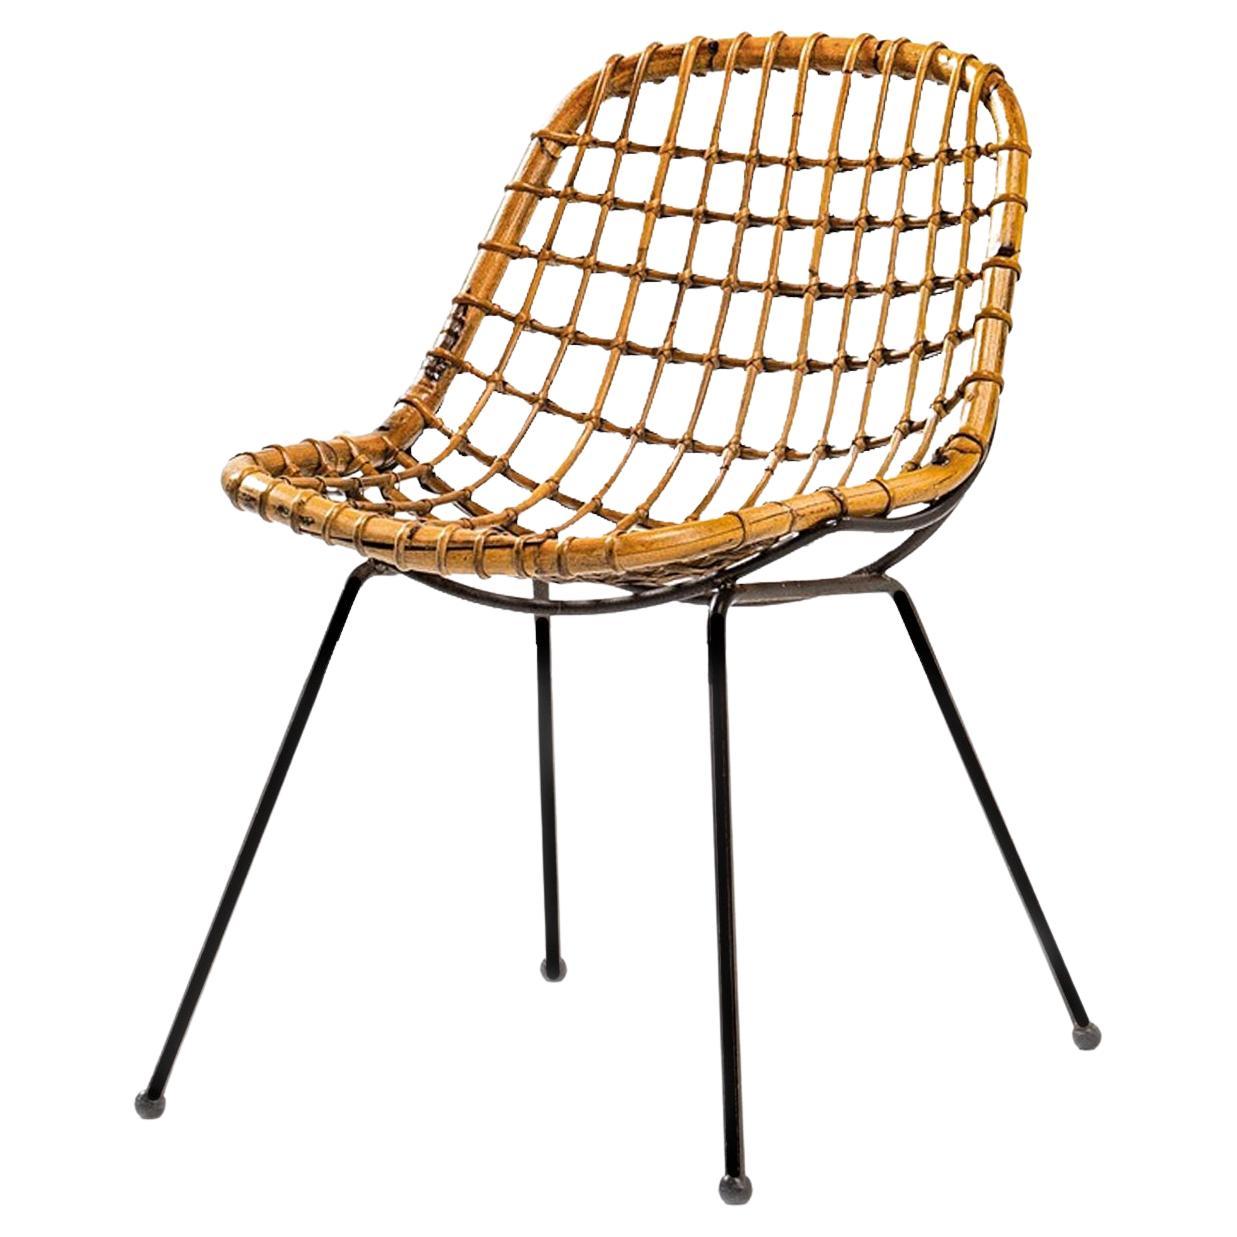 Gian Franco Legler, Splendid Set of 8 Curved Rattan Chairs For Sale